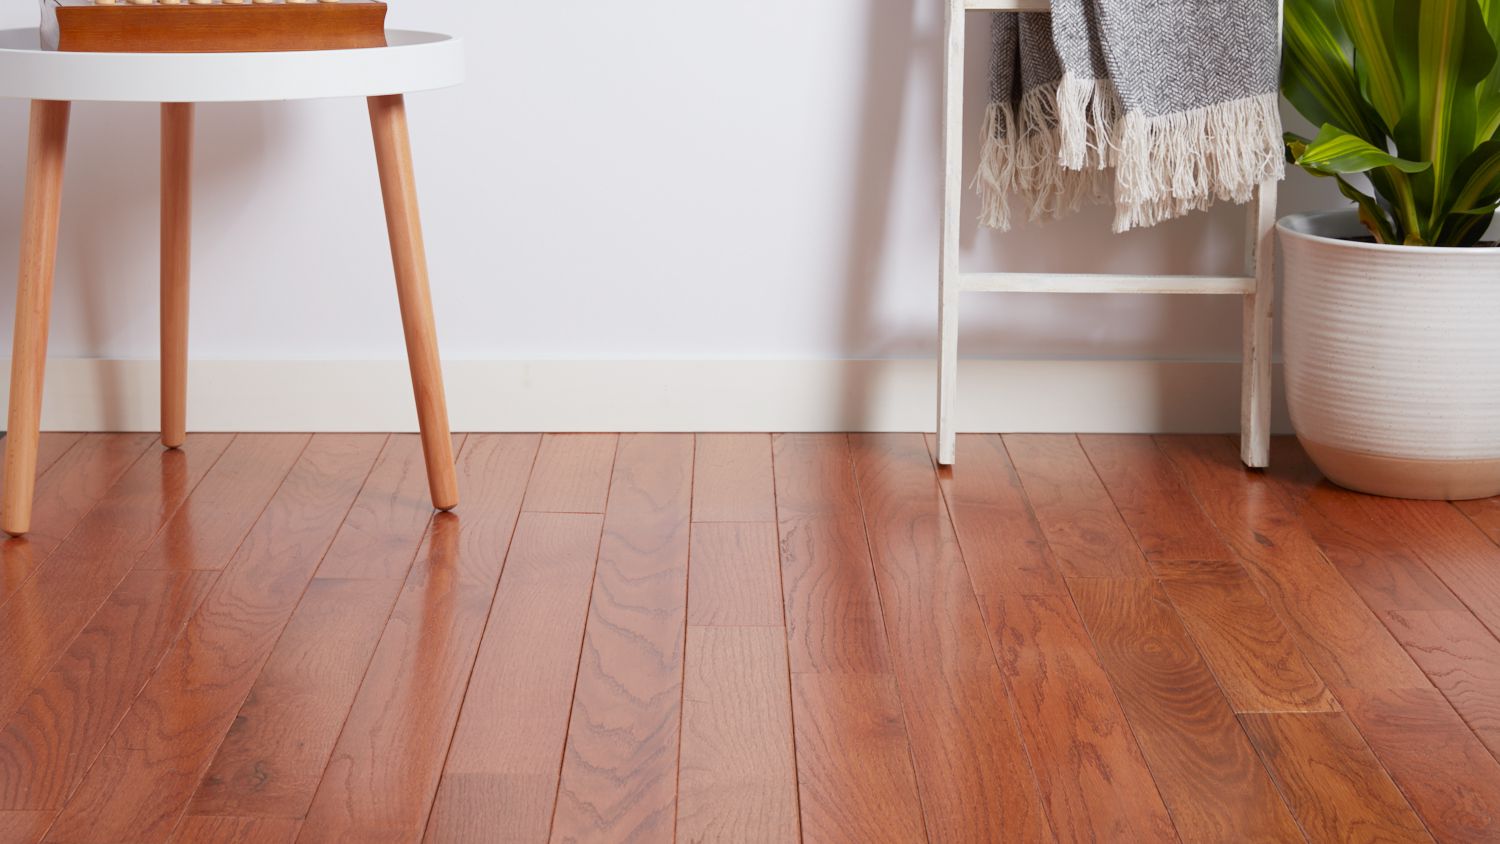 Wood Floors And Their Advantages, Disadvantages Of Hardwood Flooring